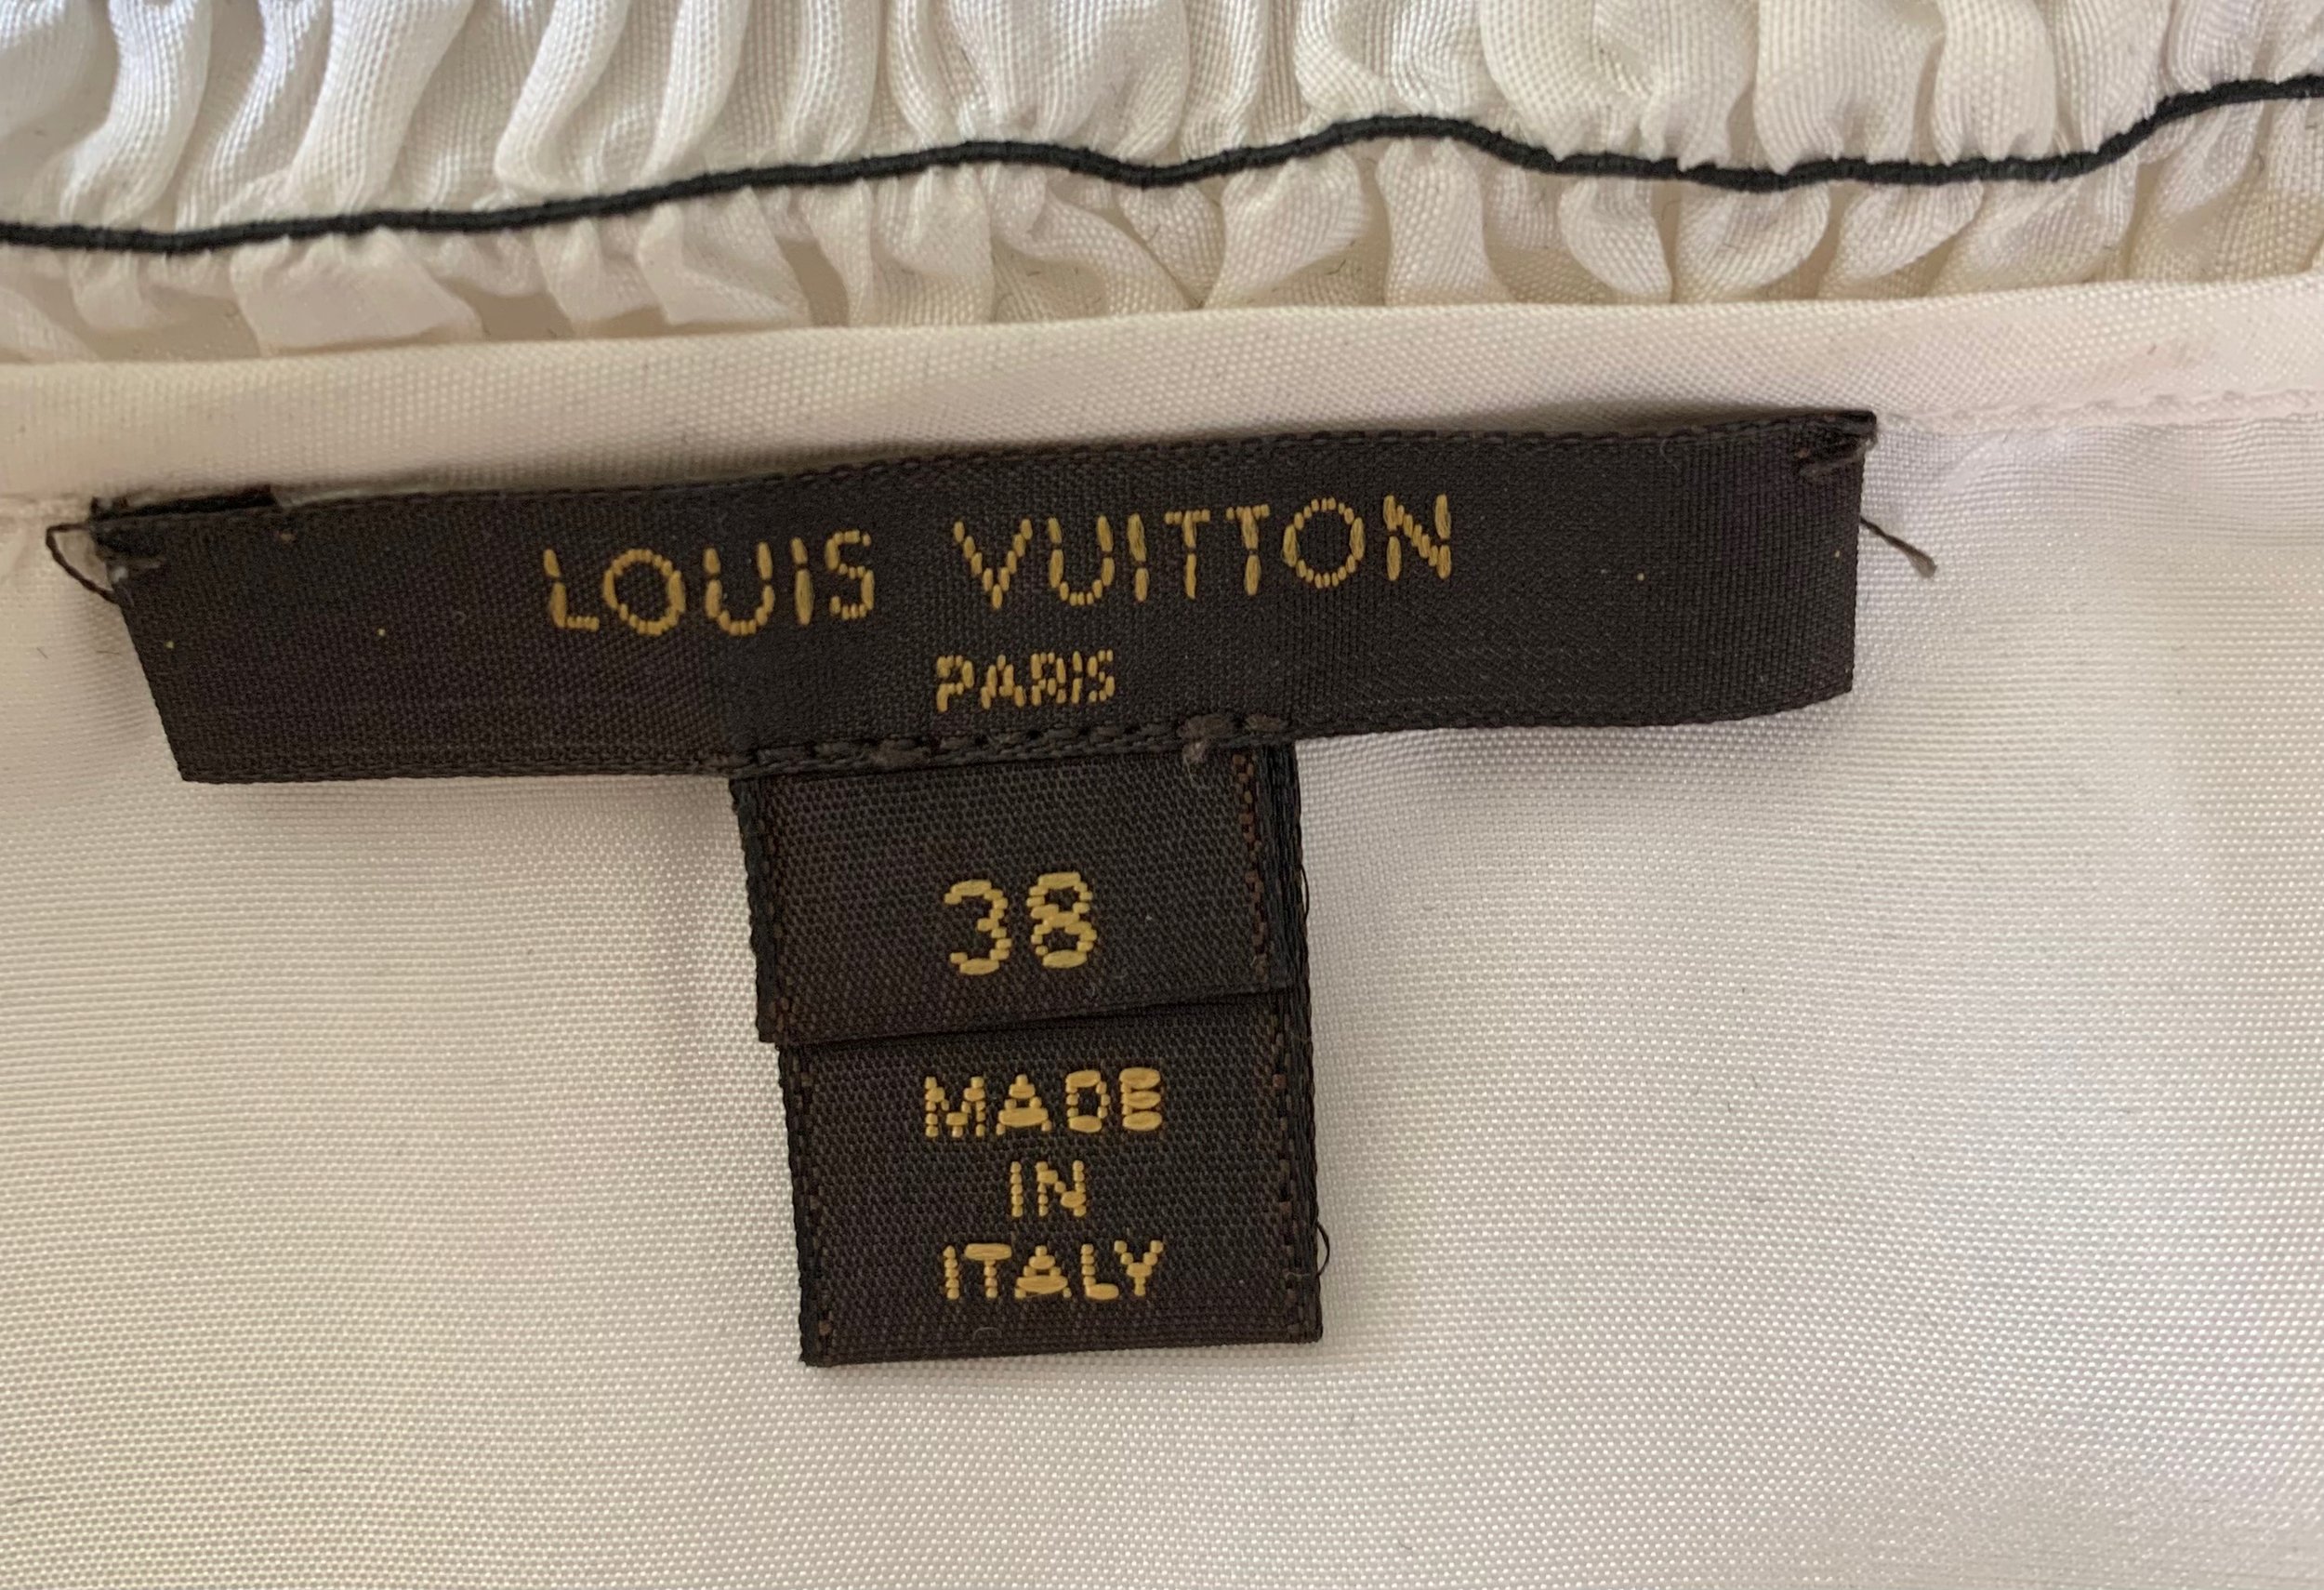 Louis Vuitton Frill Blouse Optical White. Size 36